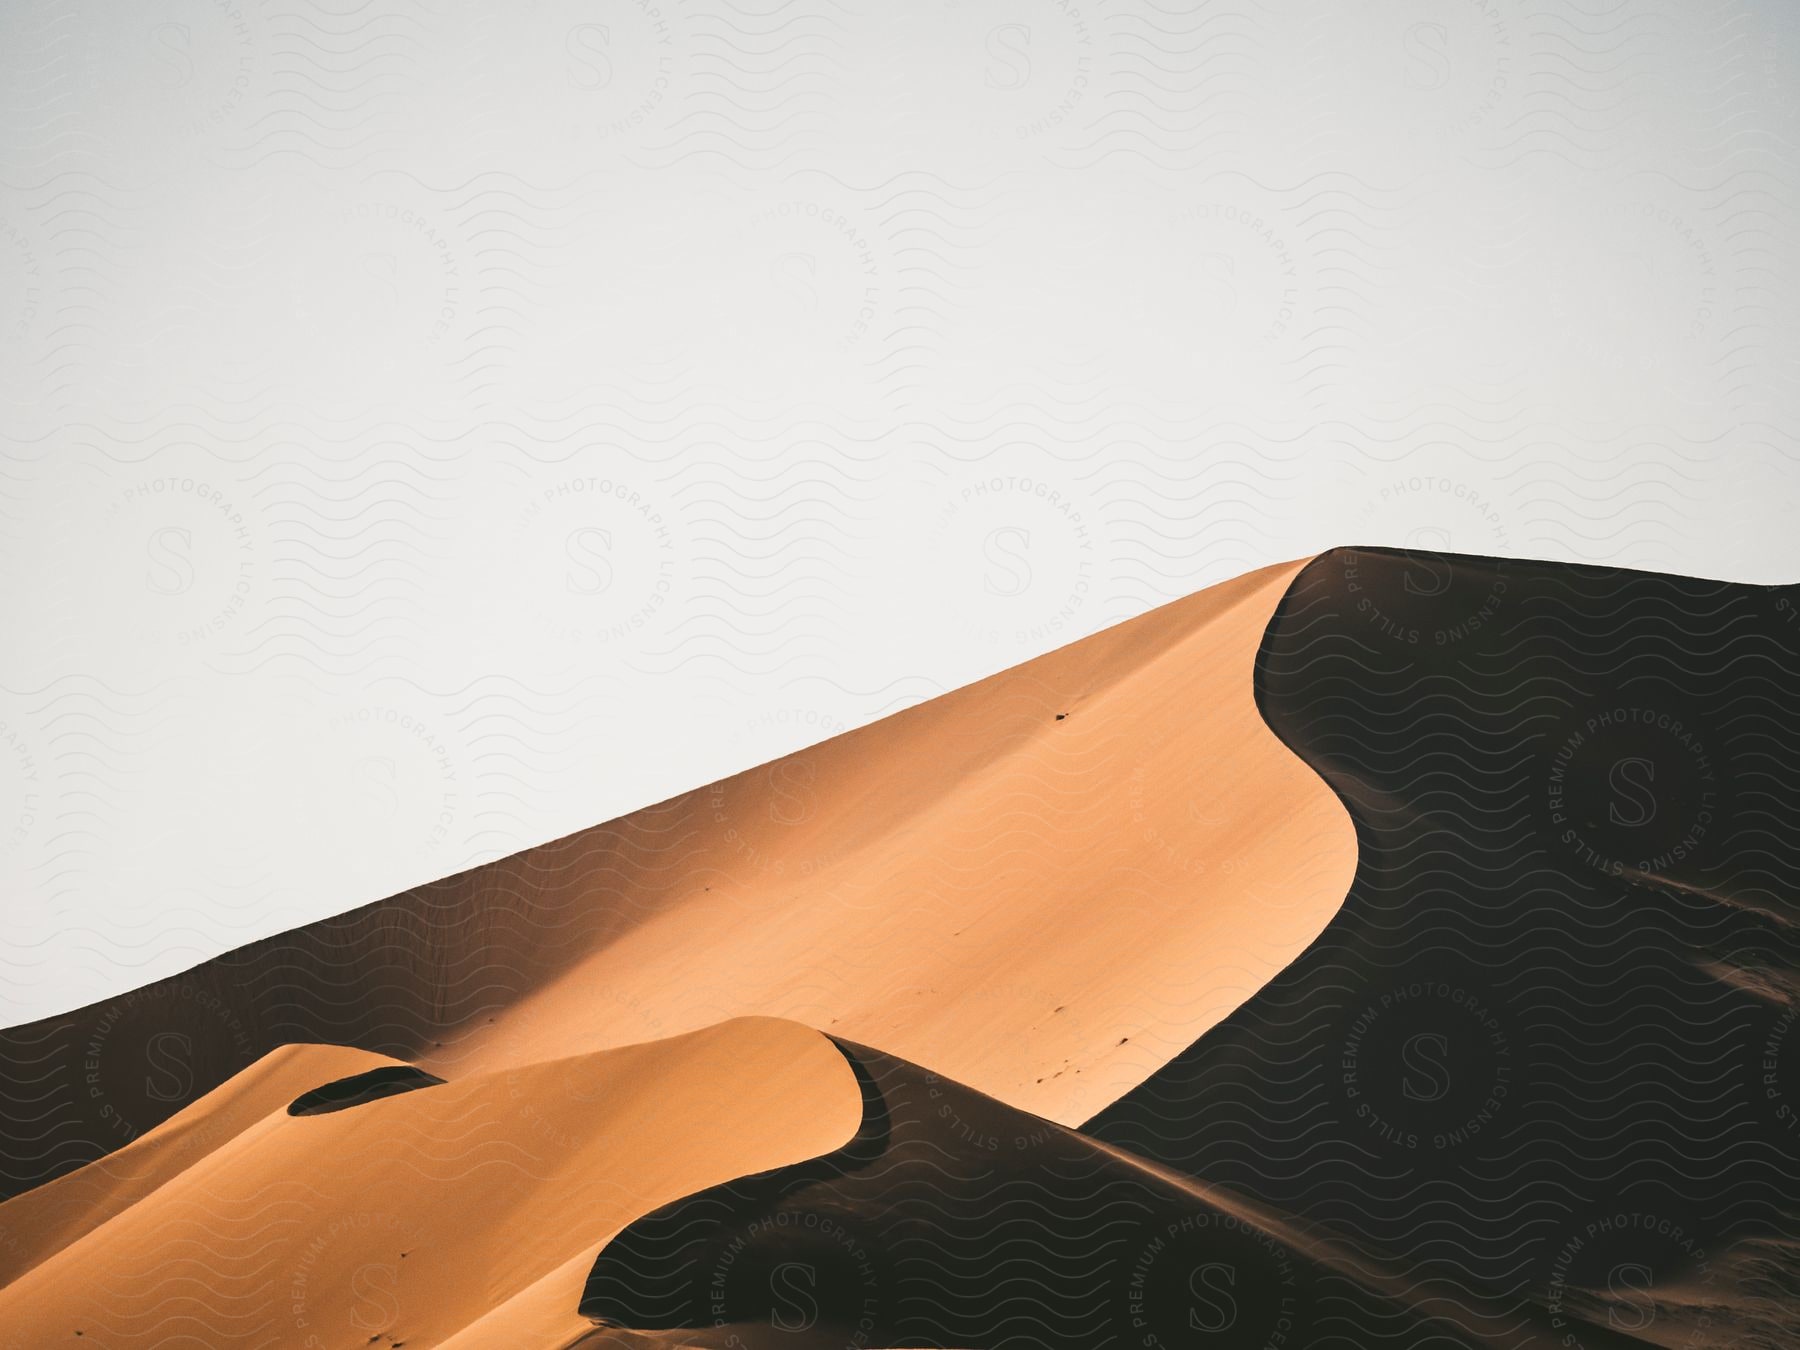 A barren desert landscape with sand dunes stretching towards the horizon